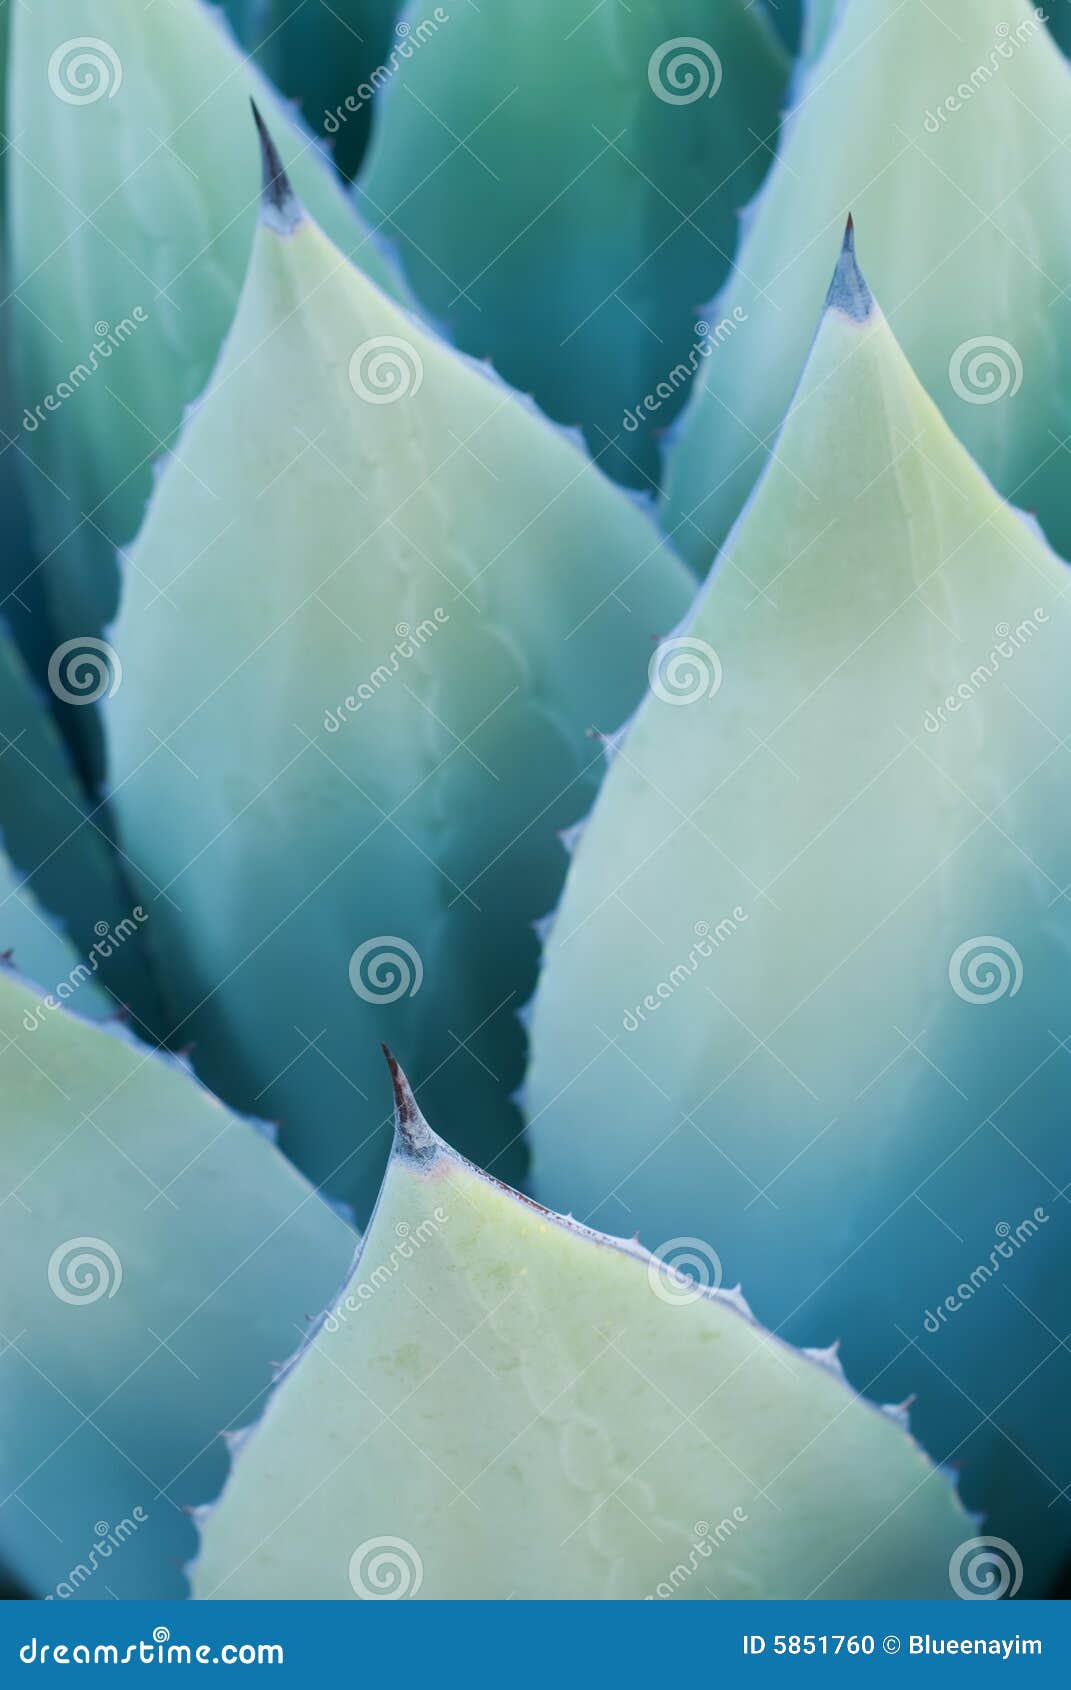 agave leaves